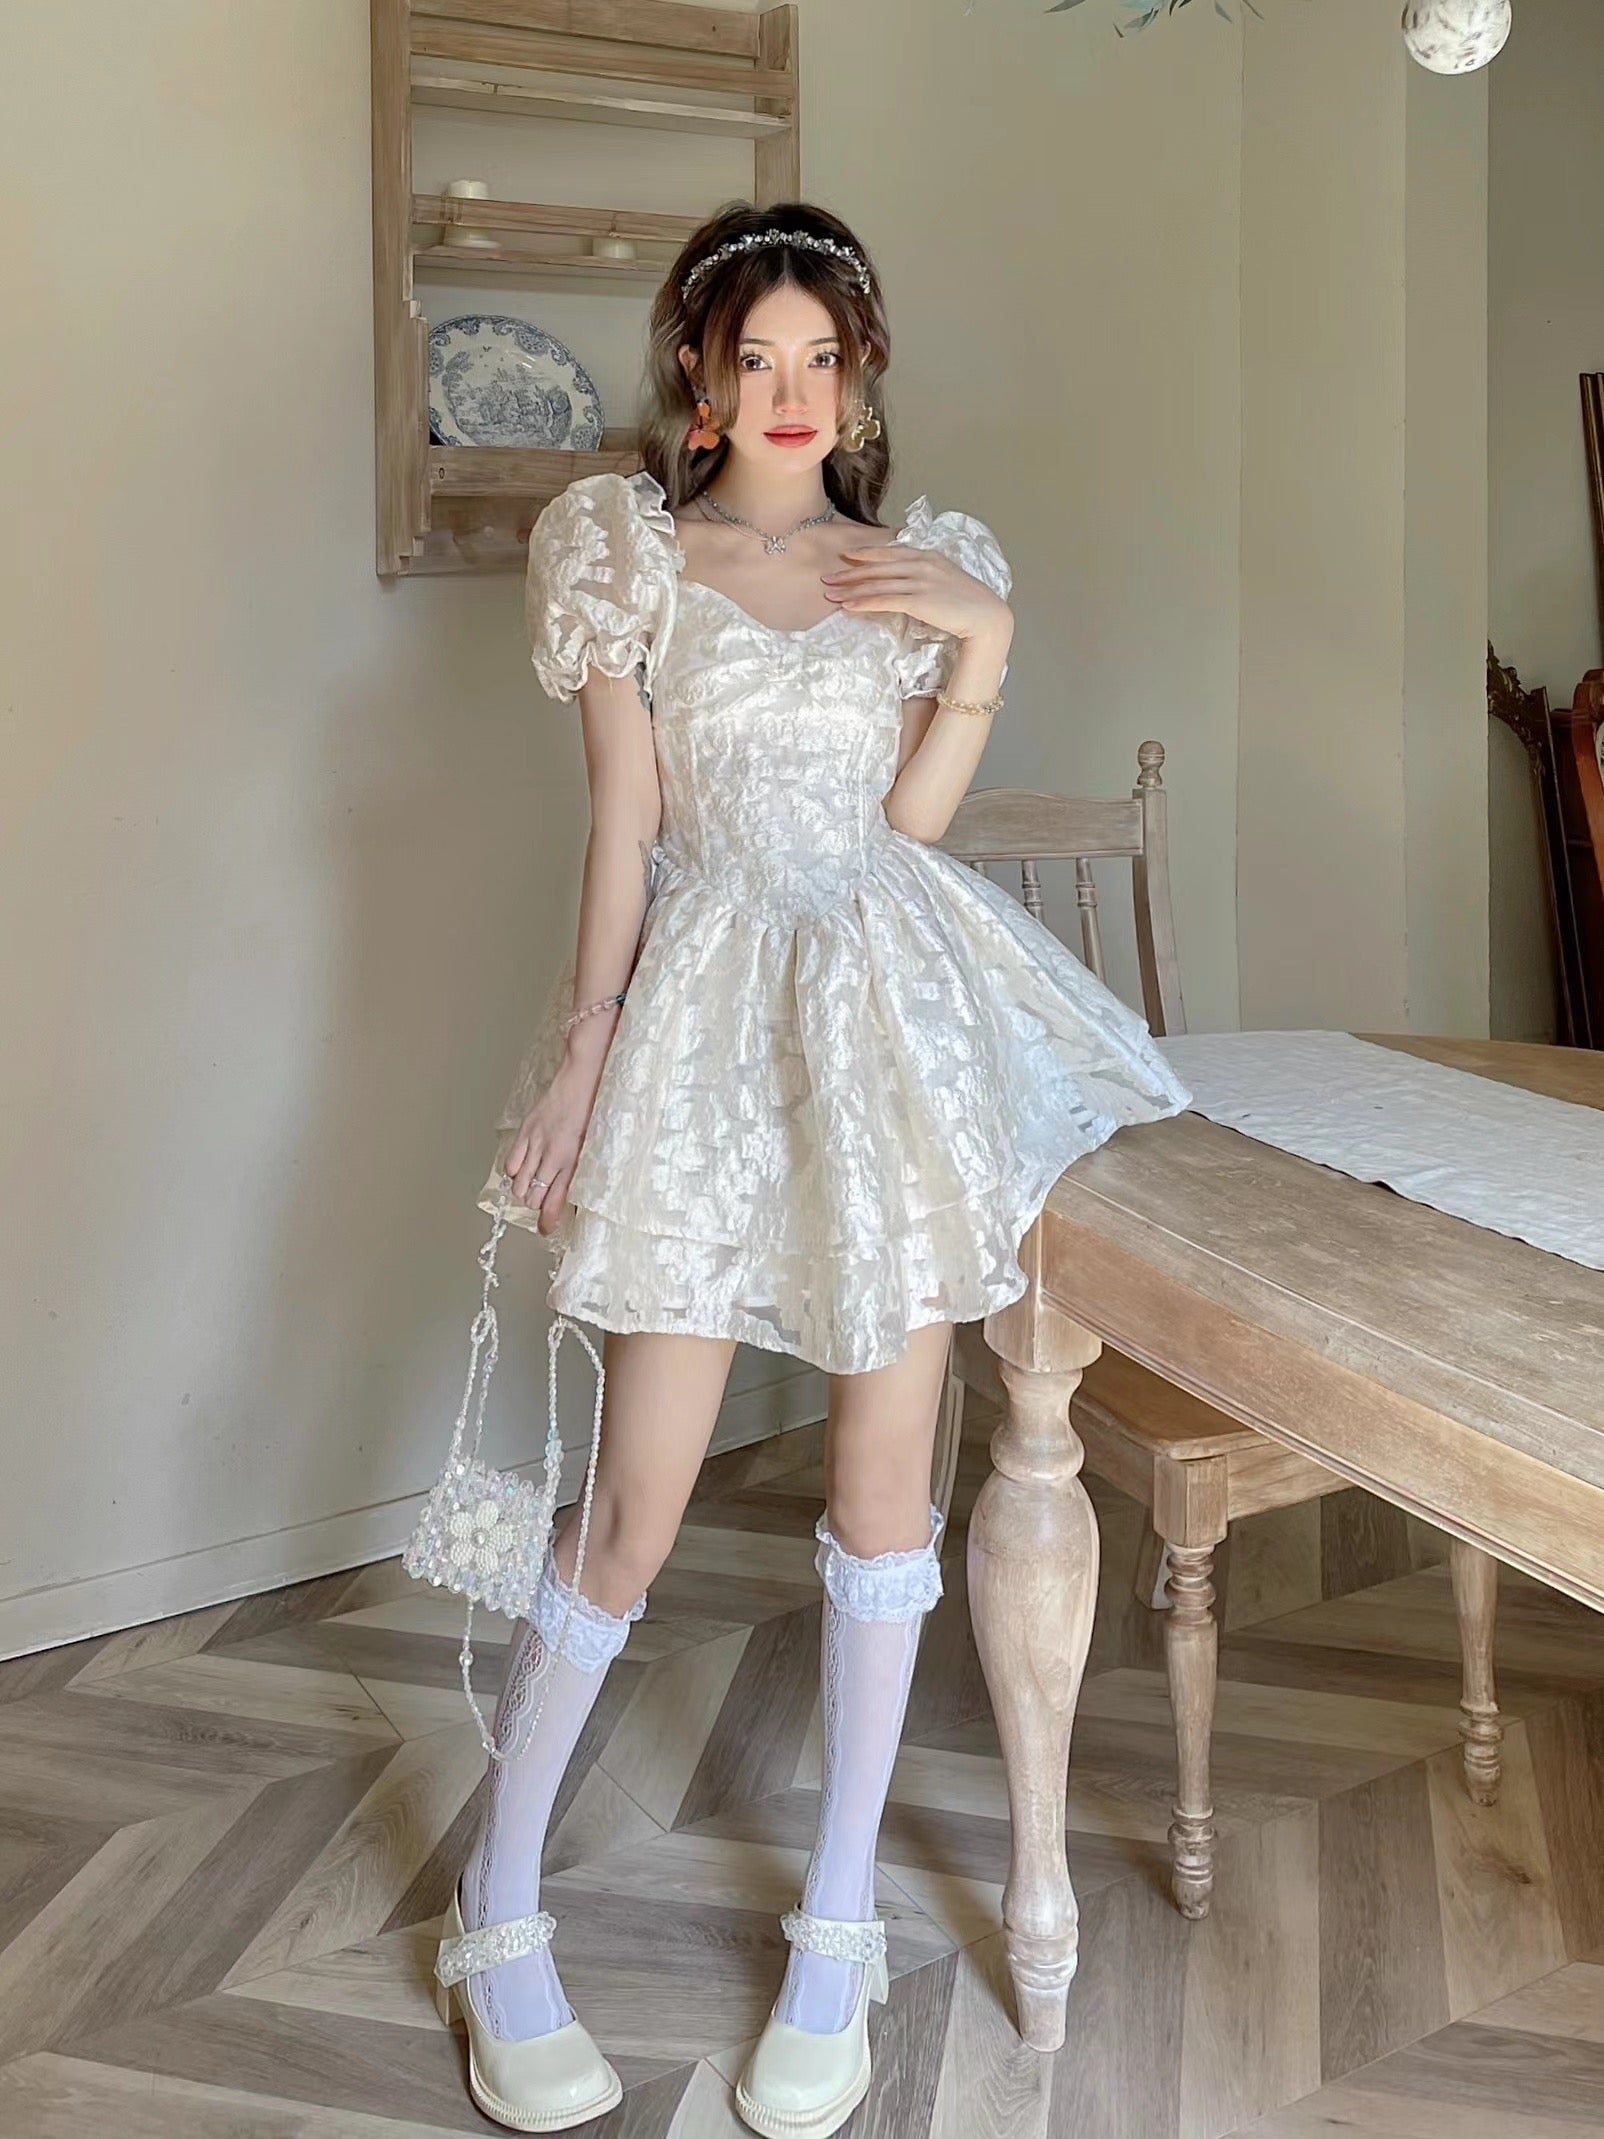 Venetian Doll Dress | Teuta Matoshi